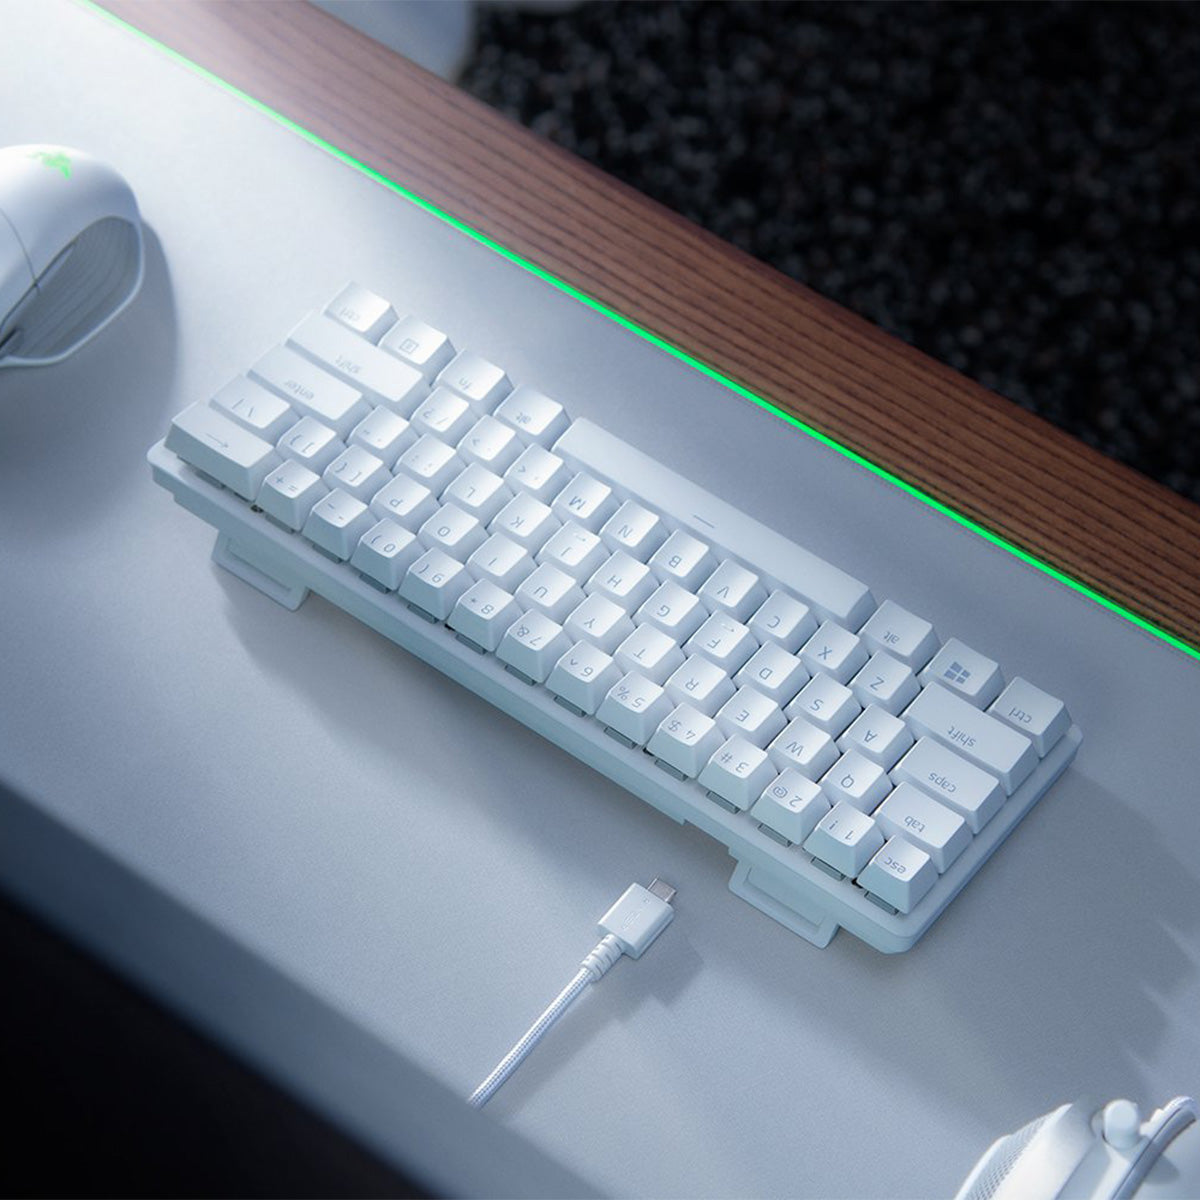 Razer Huntsman Mini RGB Clicky Optical Switch Gaming Keyboard